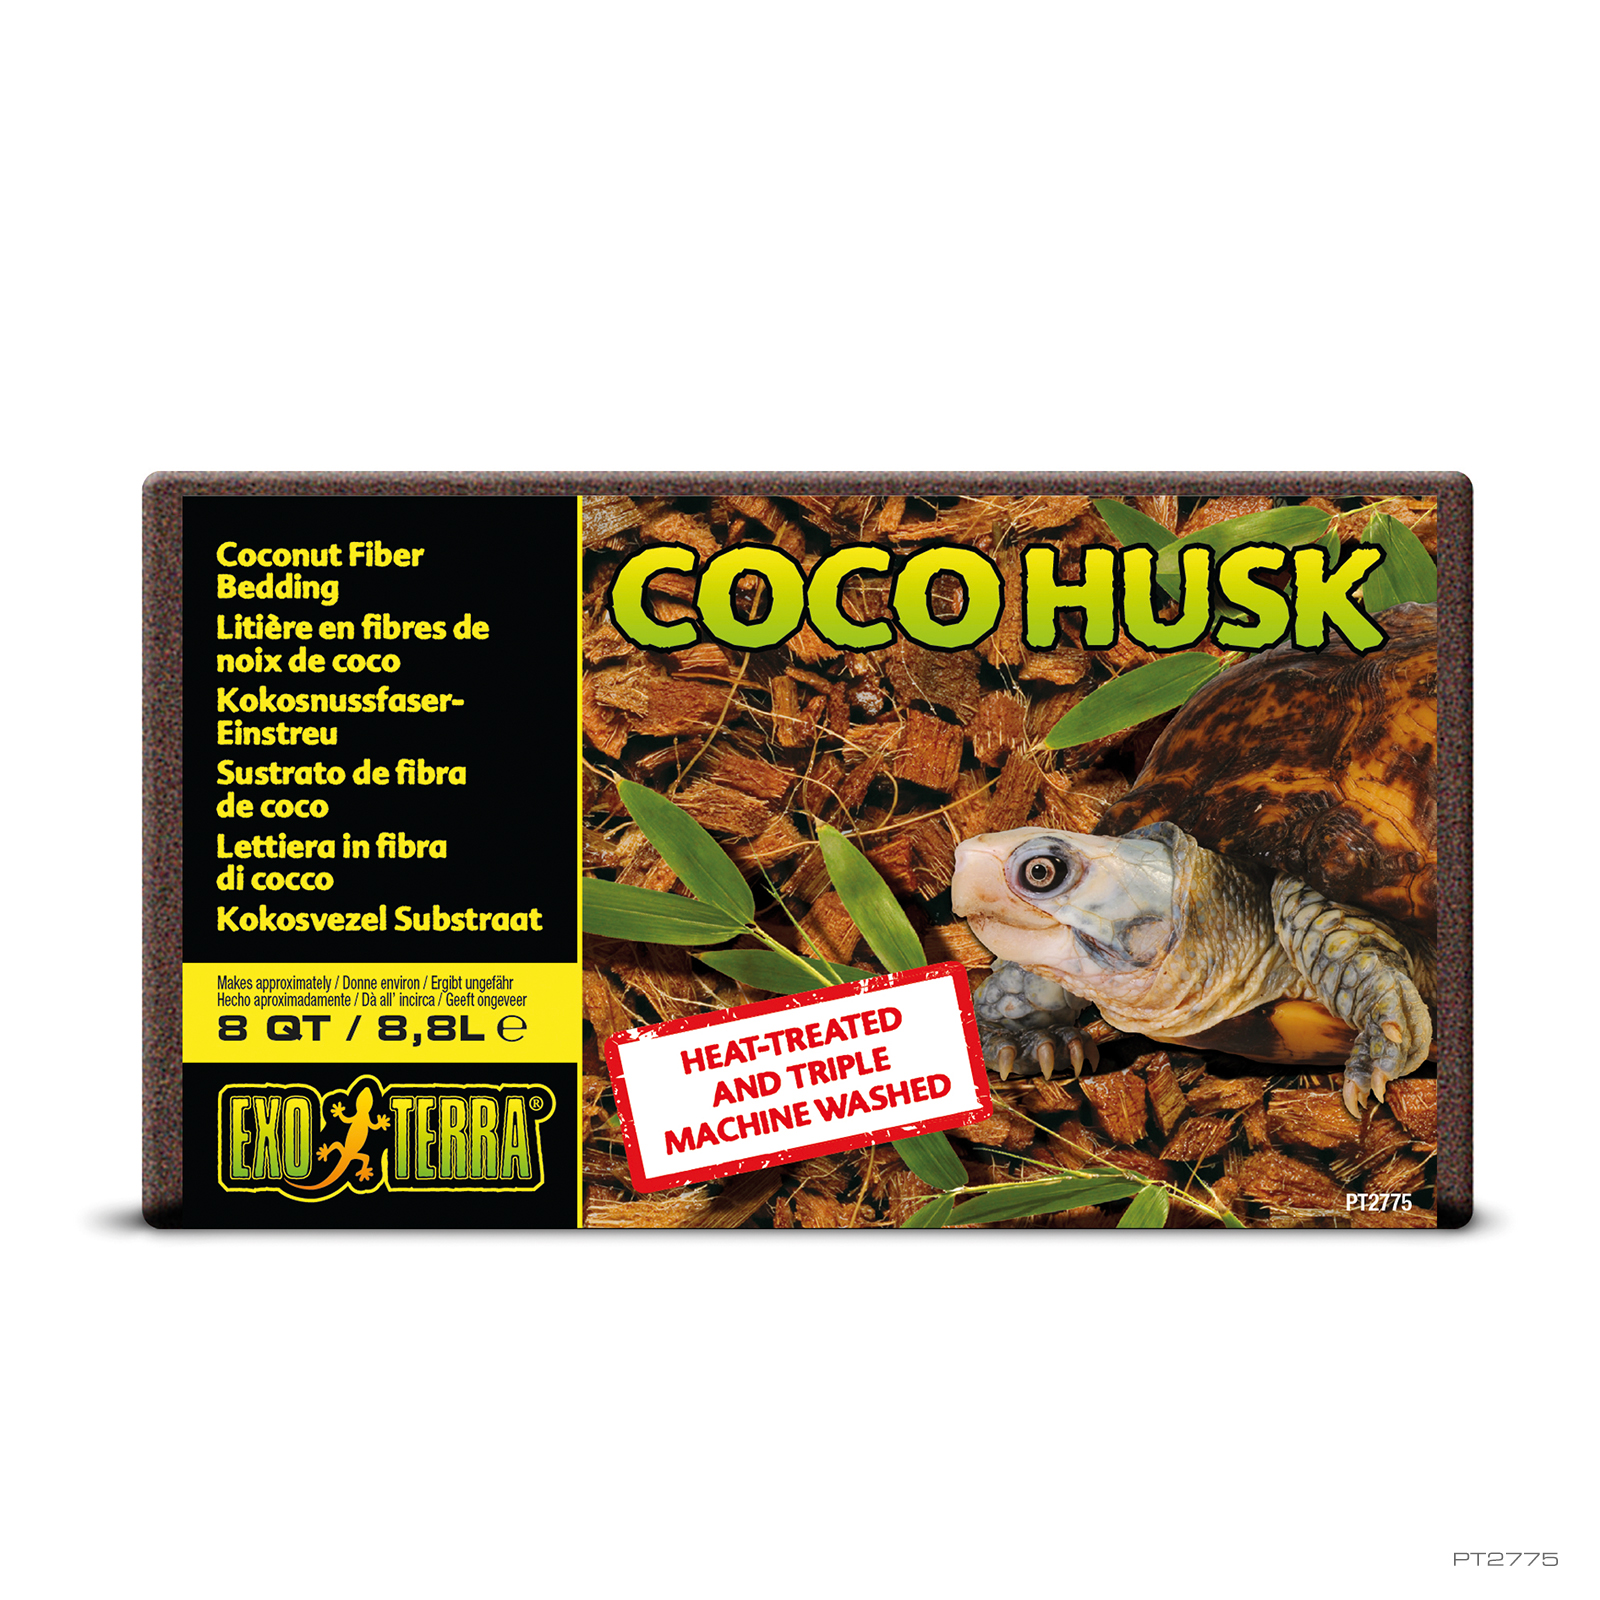 Coco Husk Brick 8QT - 8,8L